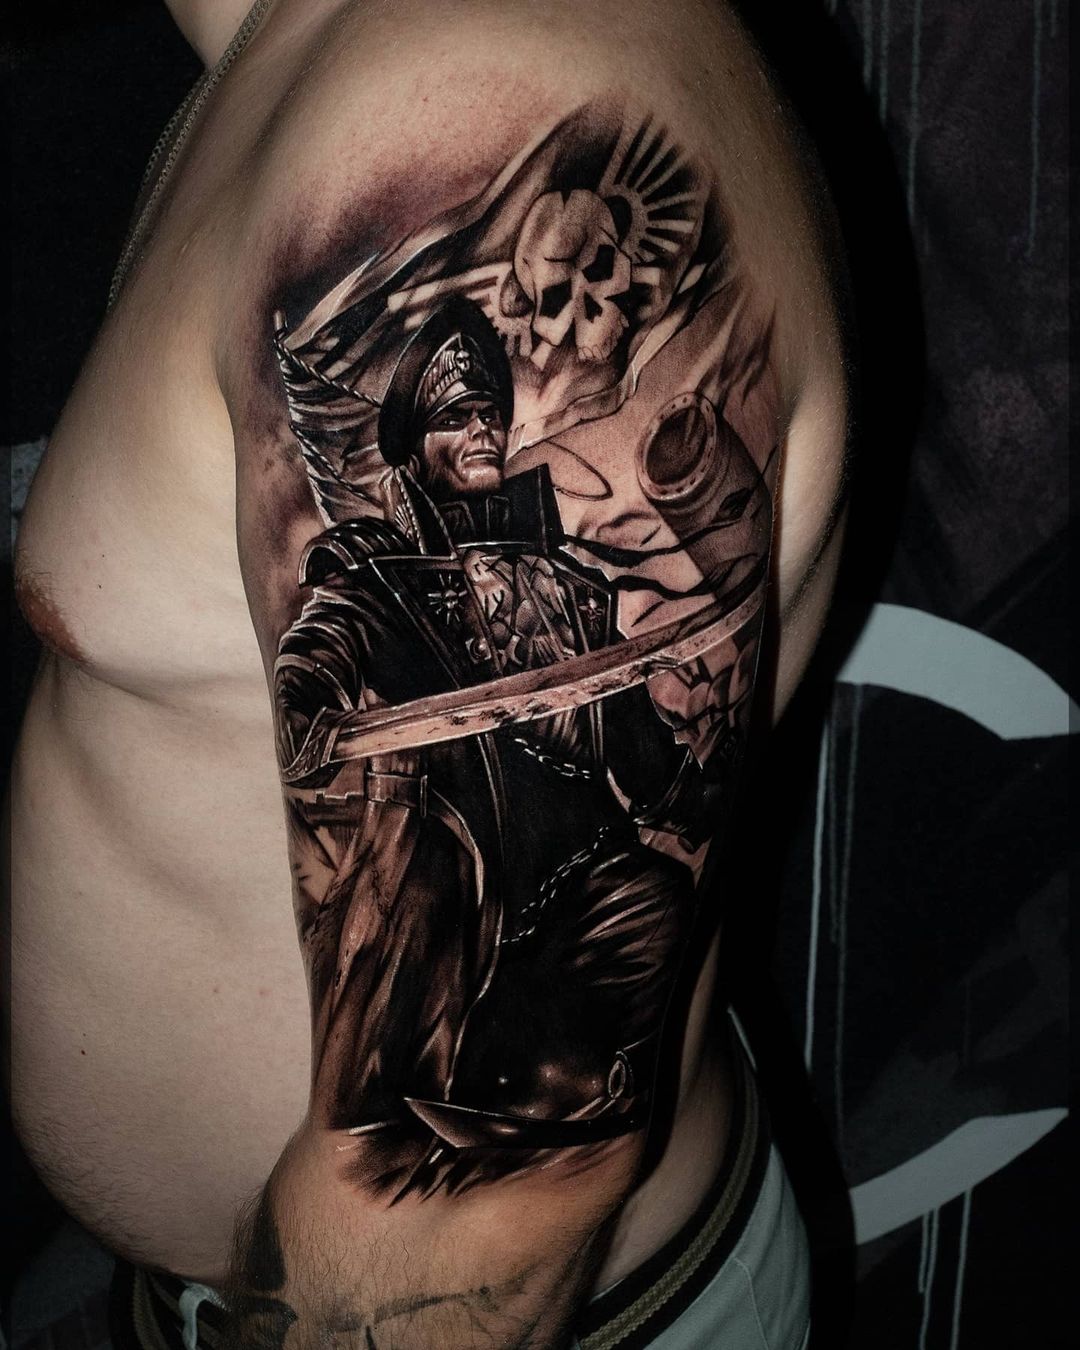 Warhammer tattoo